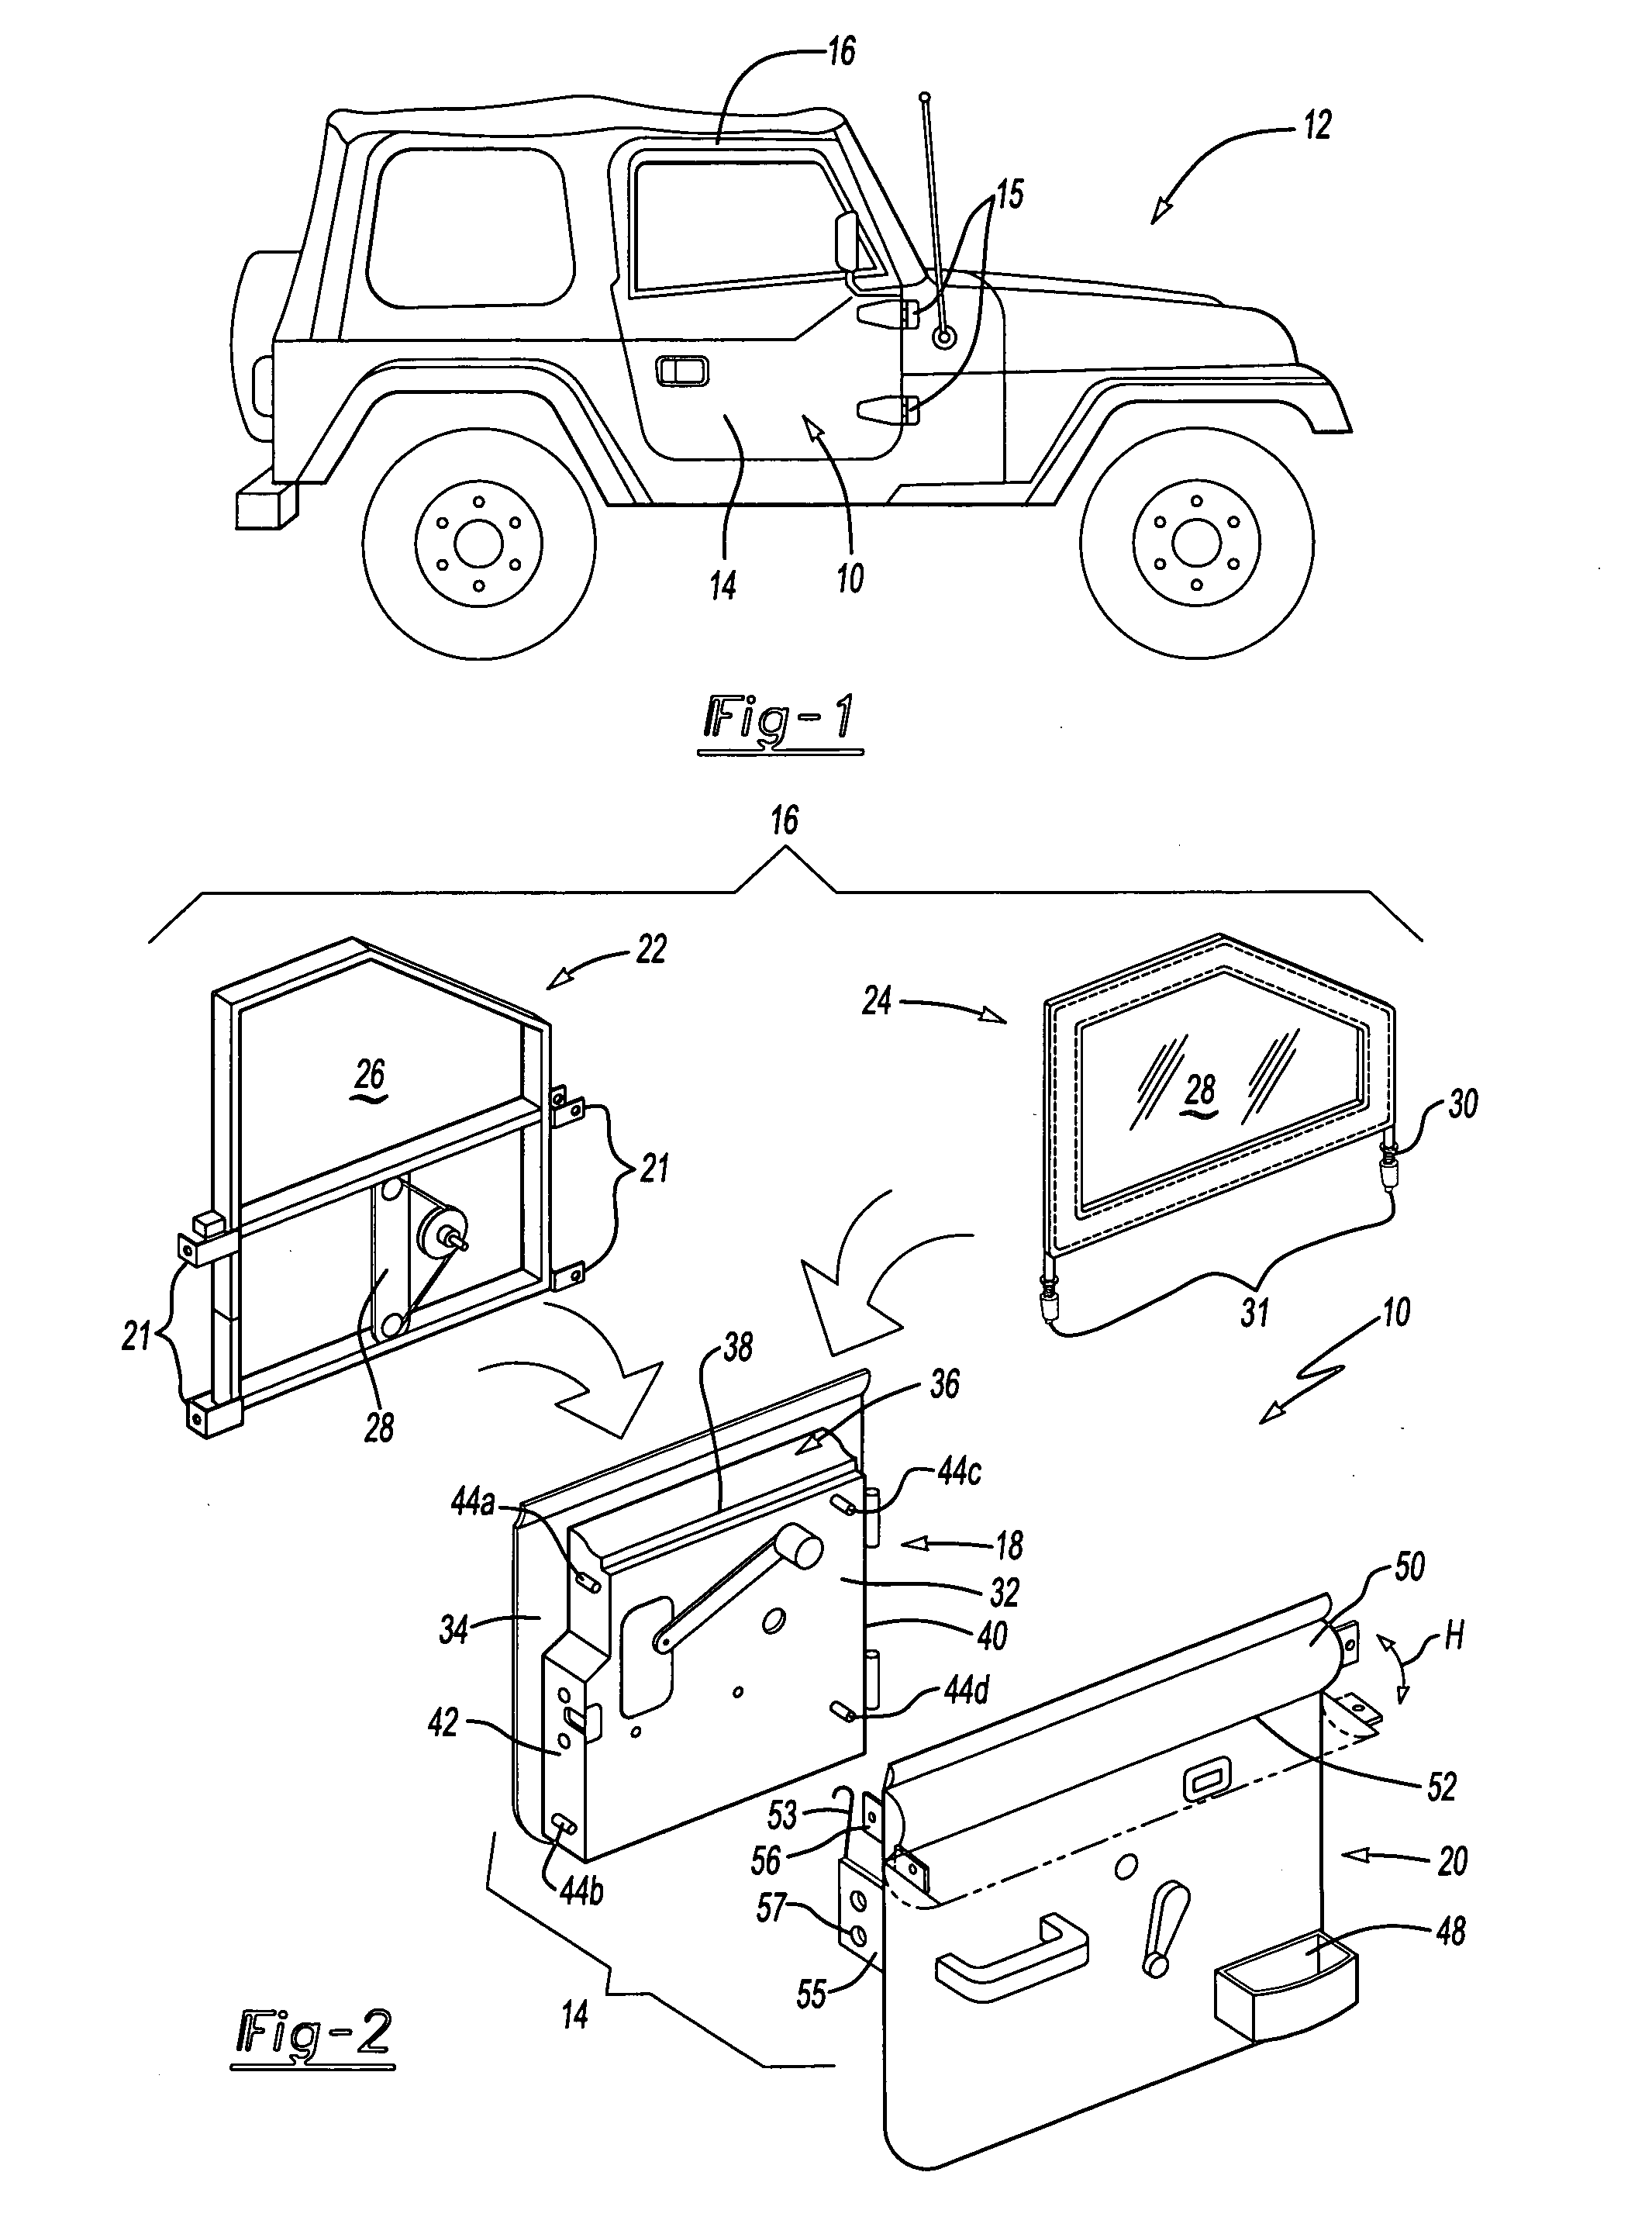 Multi-configuration vehicle door system